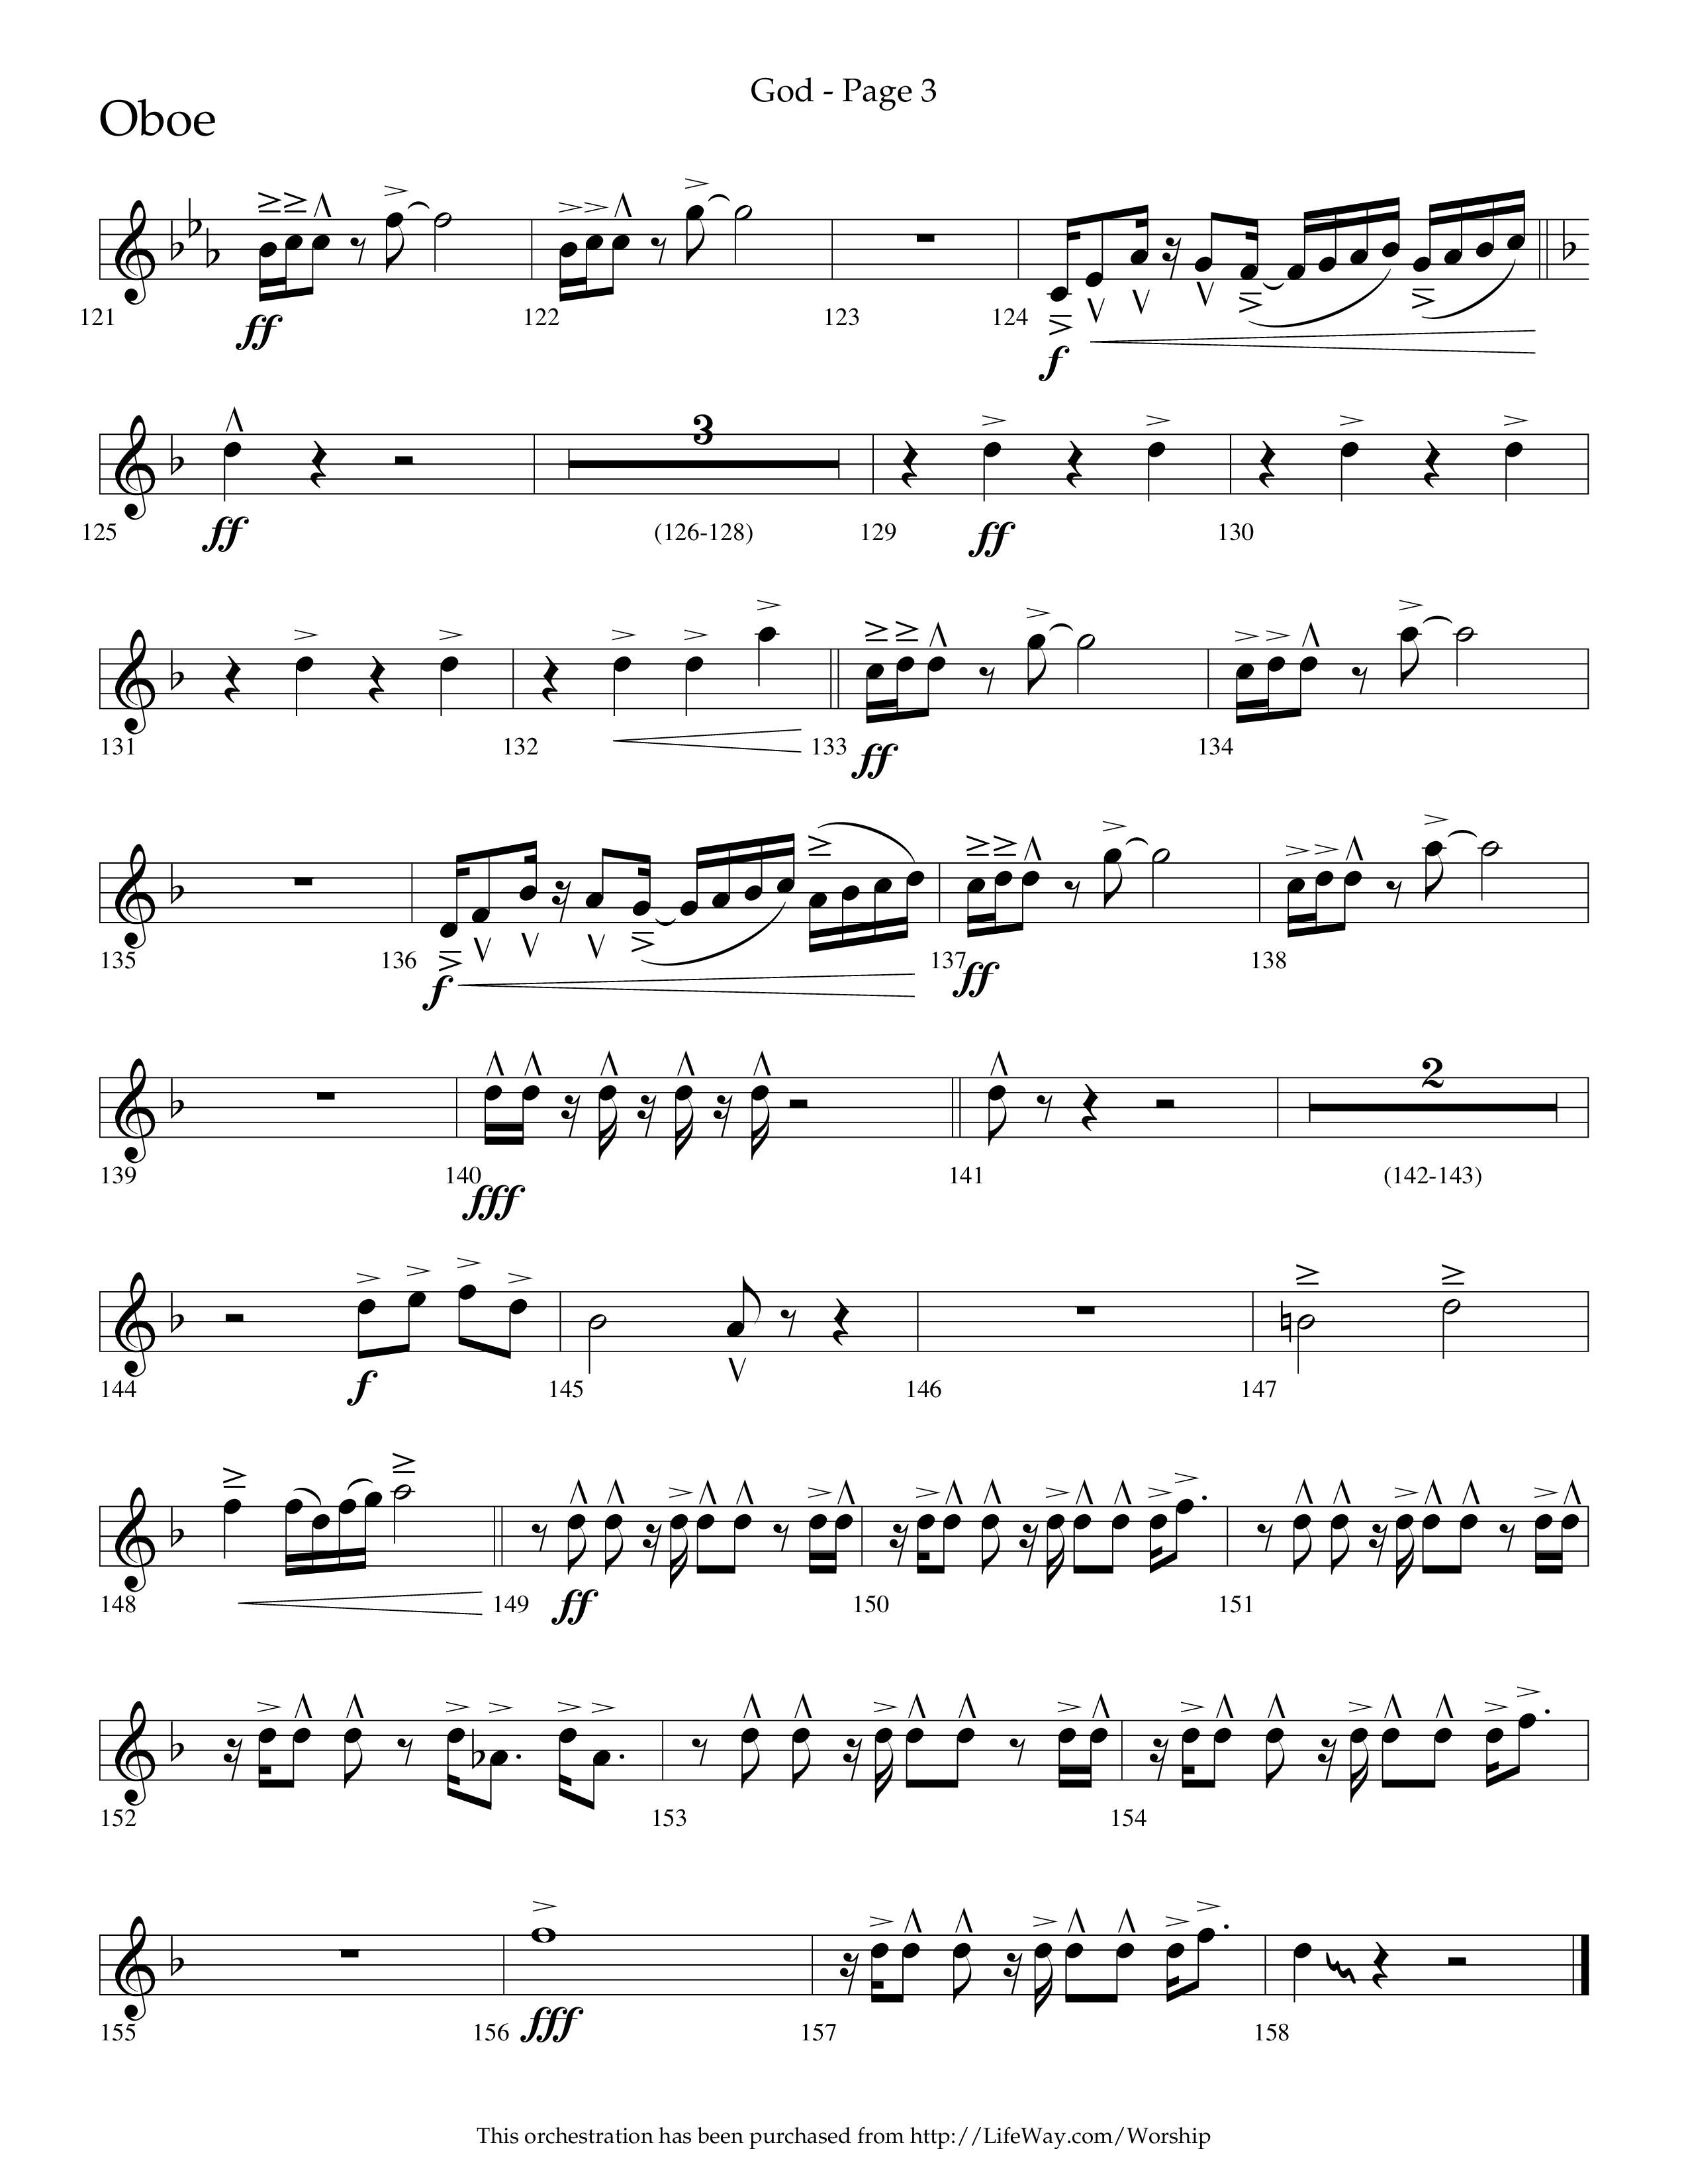 God (Choral Anthem SATB) Oboe (Lifeway Choral / Arr. Cliff Duren)